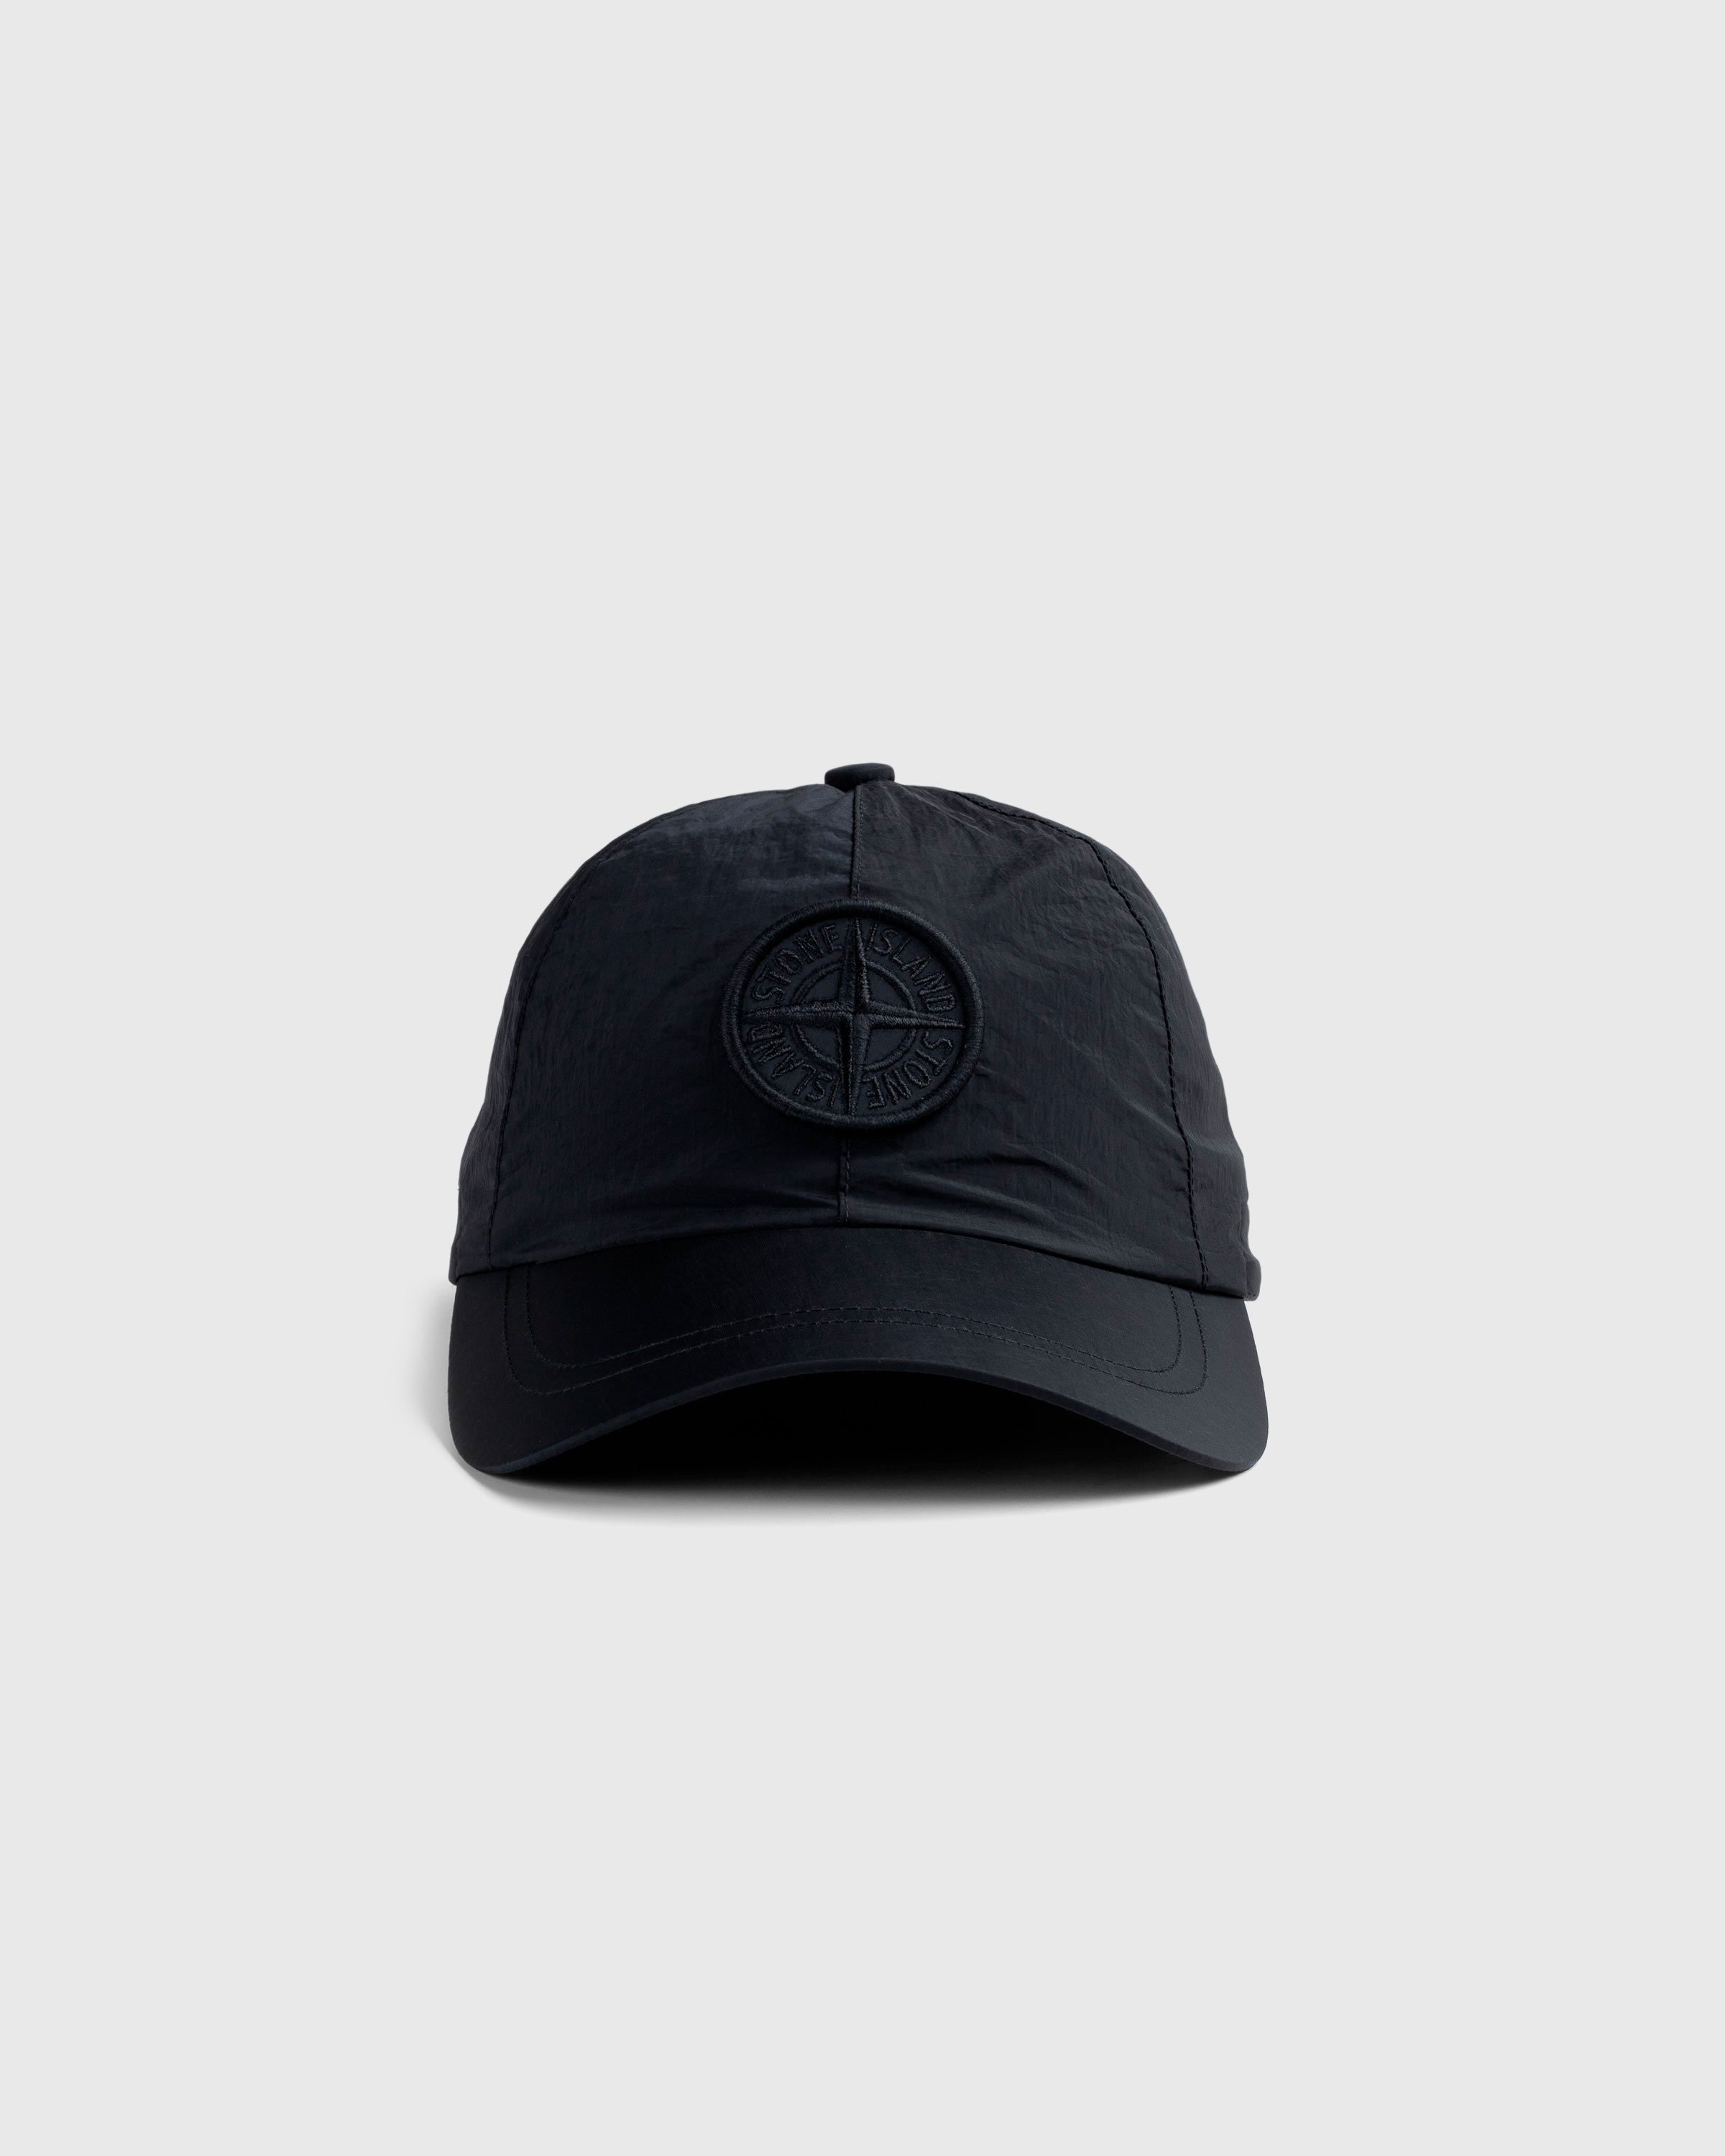 Stone Island – Six Panel Cap Black - Hats - Black - Image 2